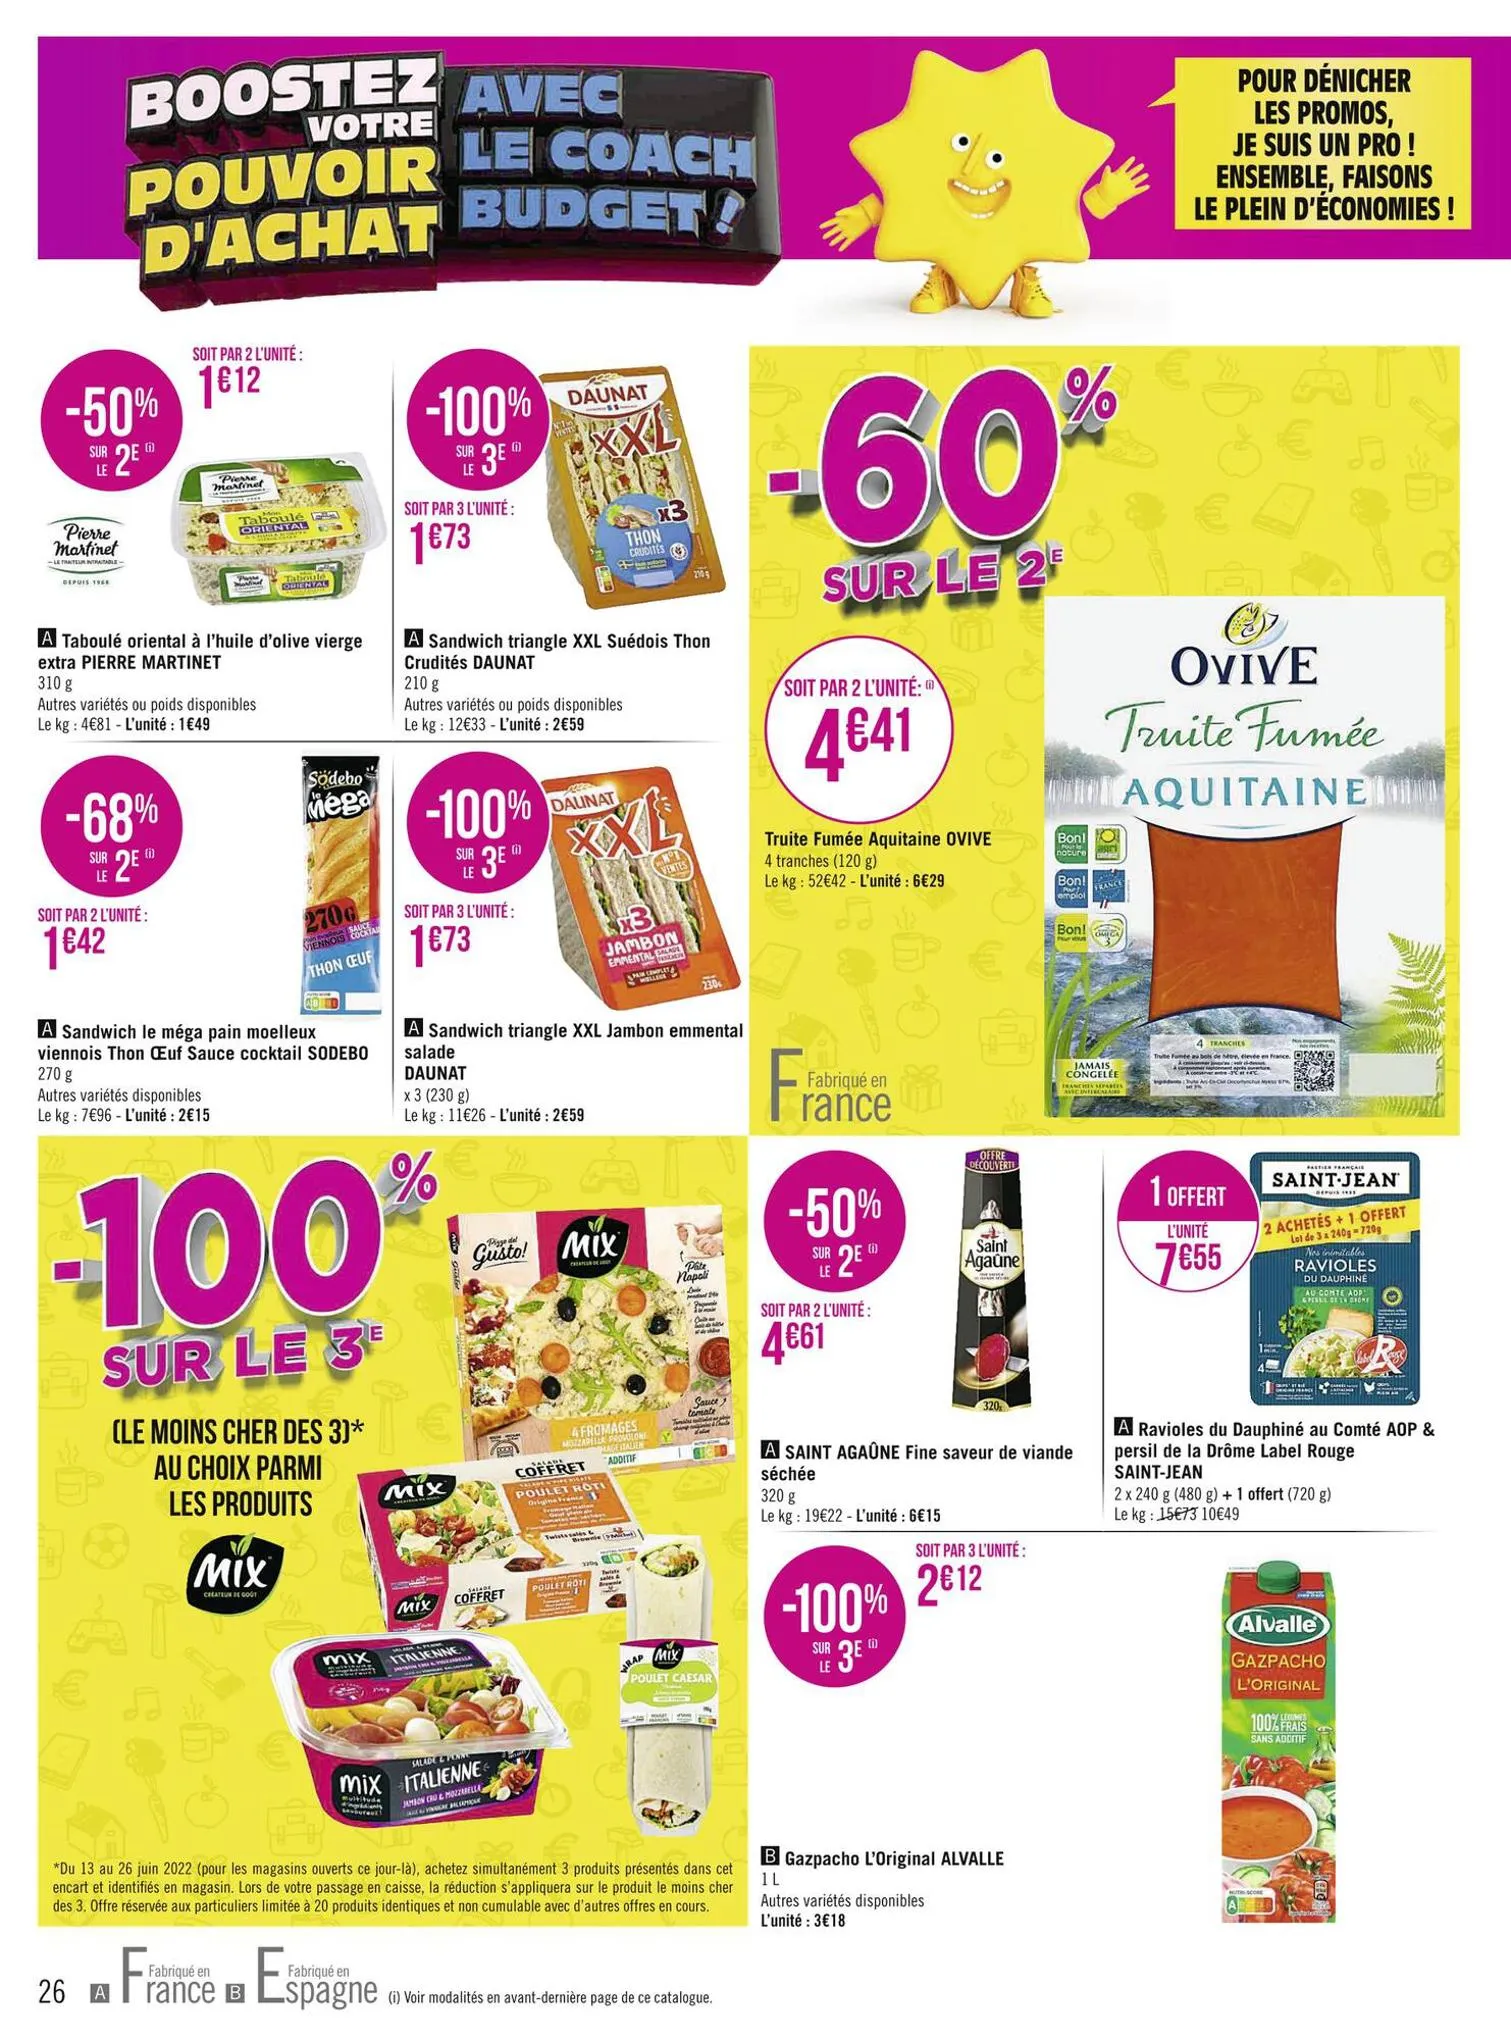 Catalogue Les coachs shopping, page 00026